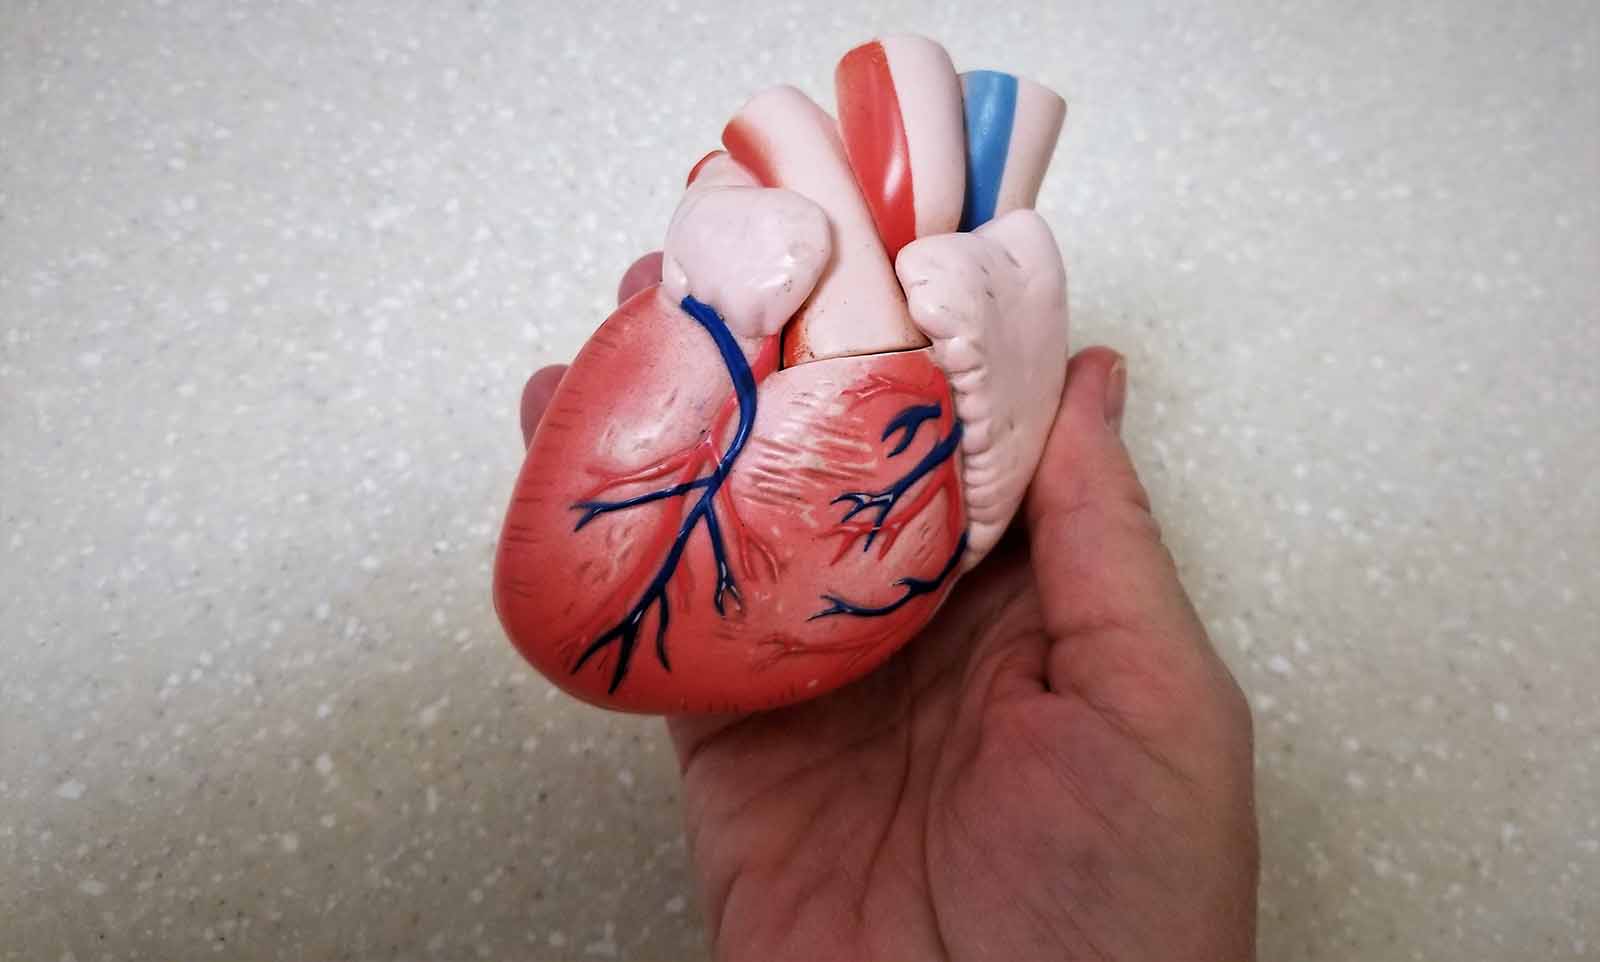 human-heart